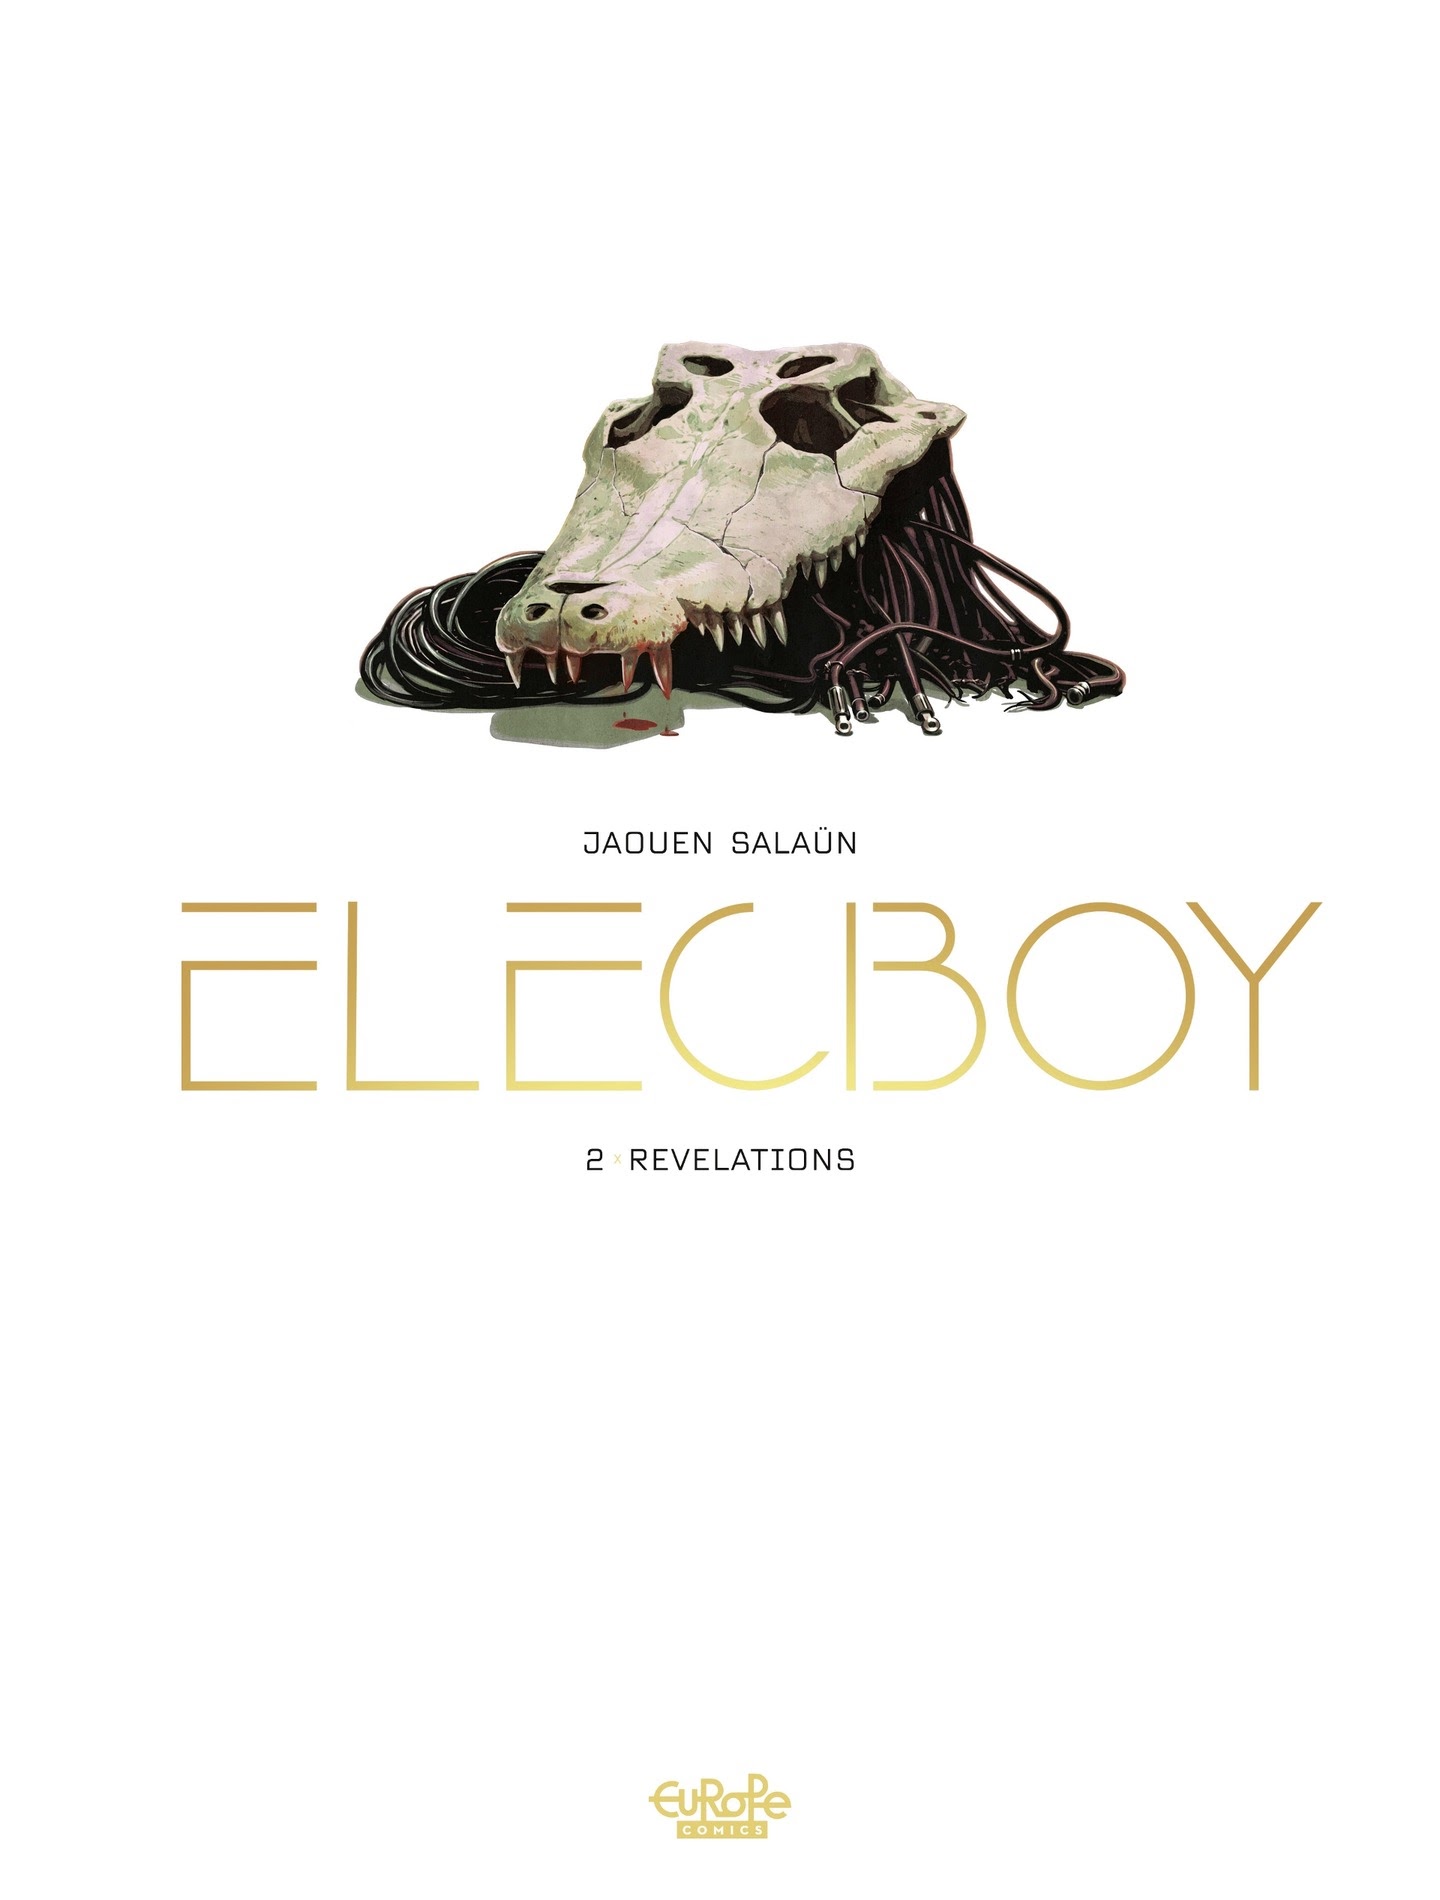 Read online Elecboy comic -  Issue #2 - 2